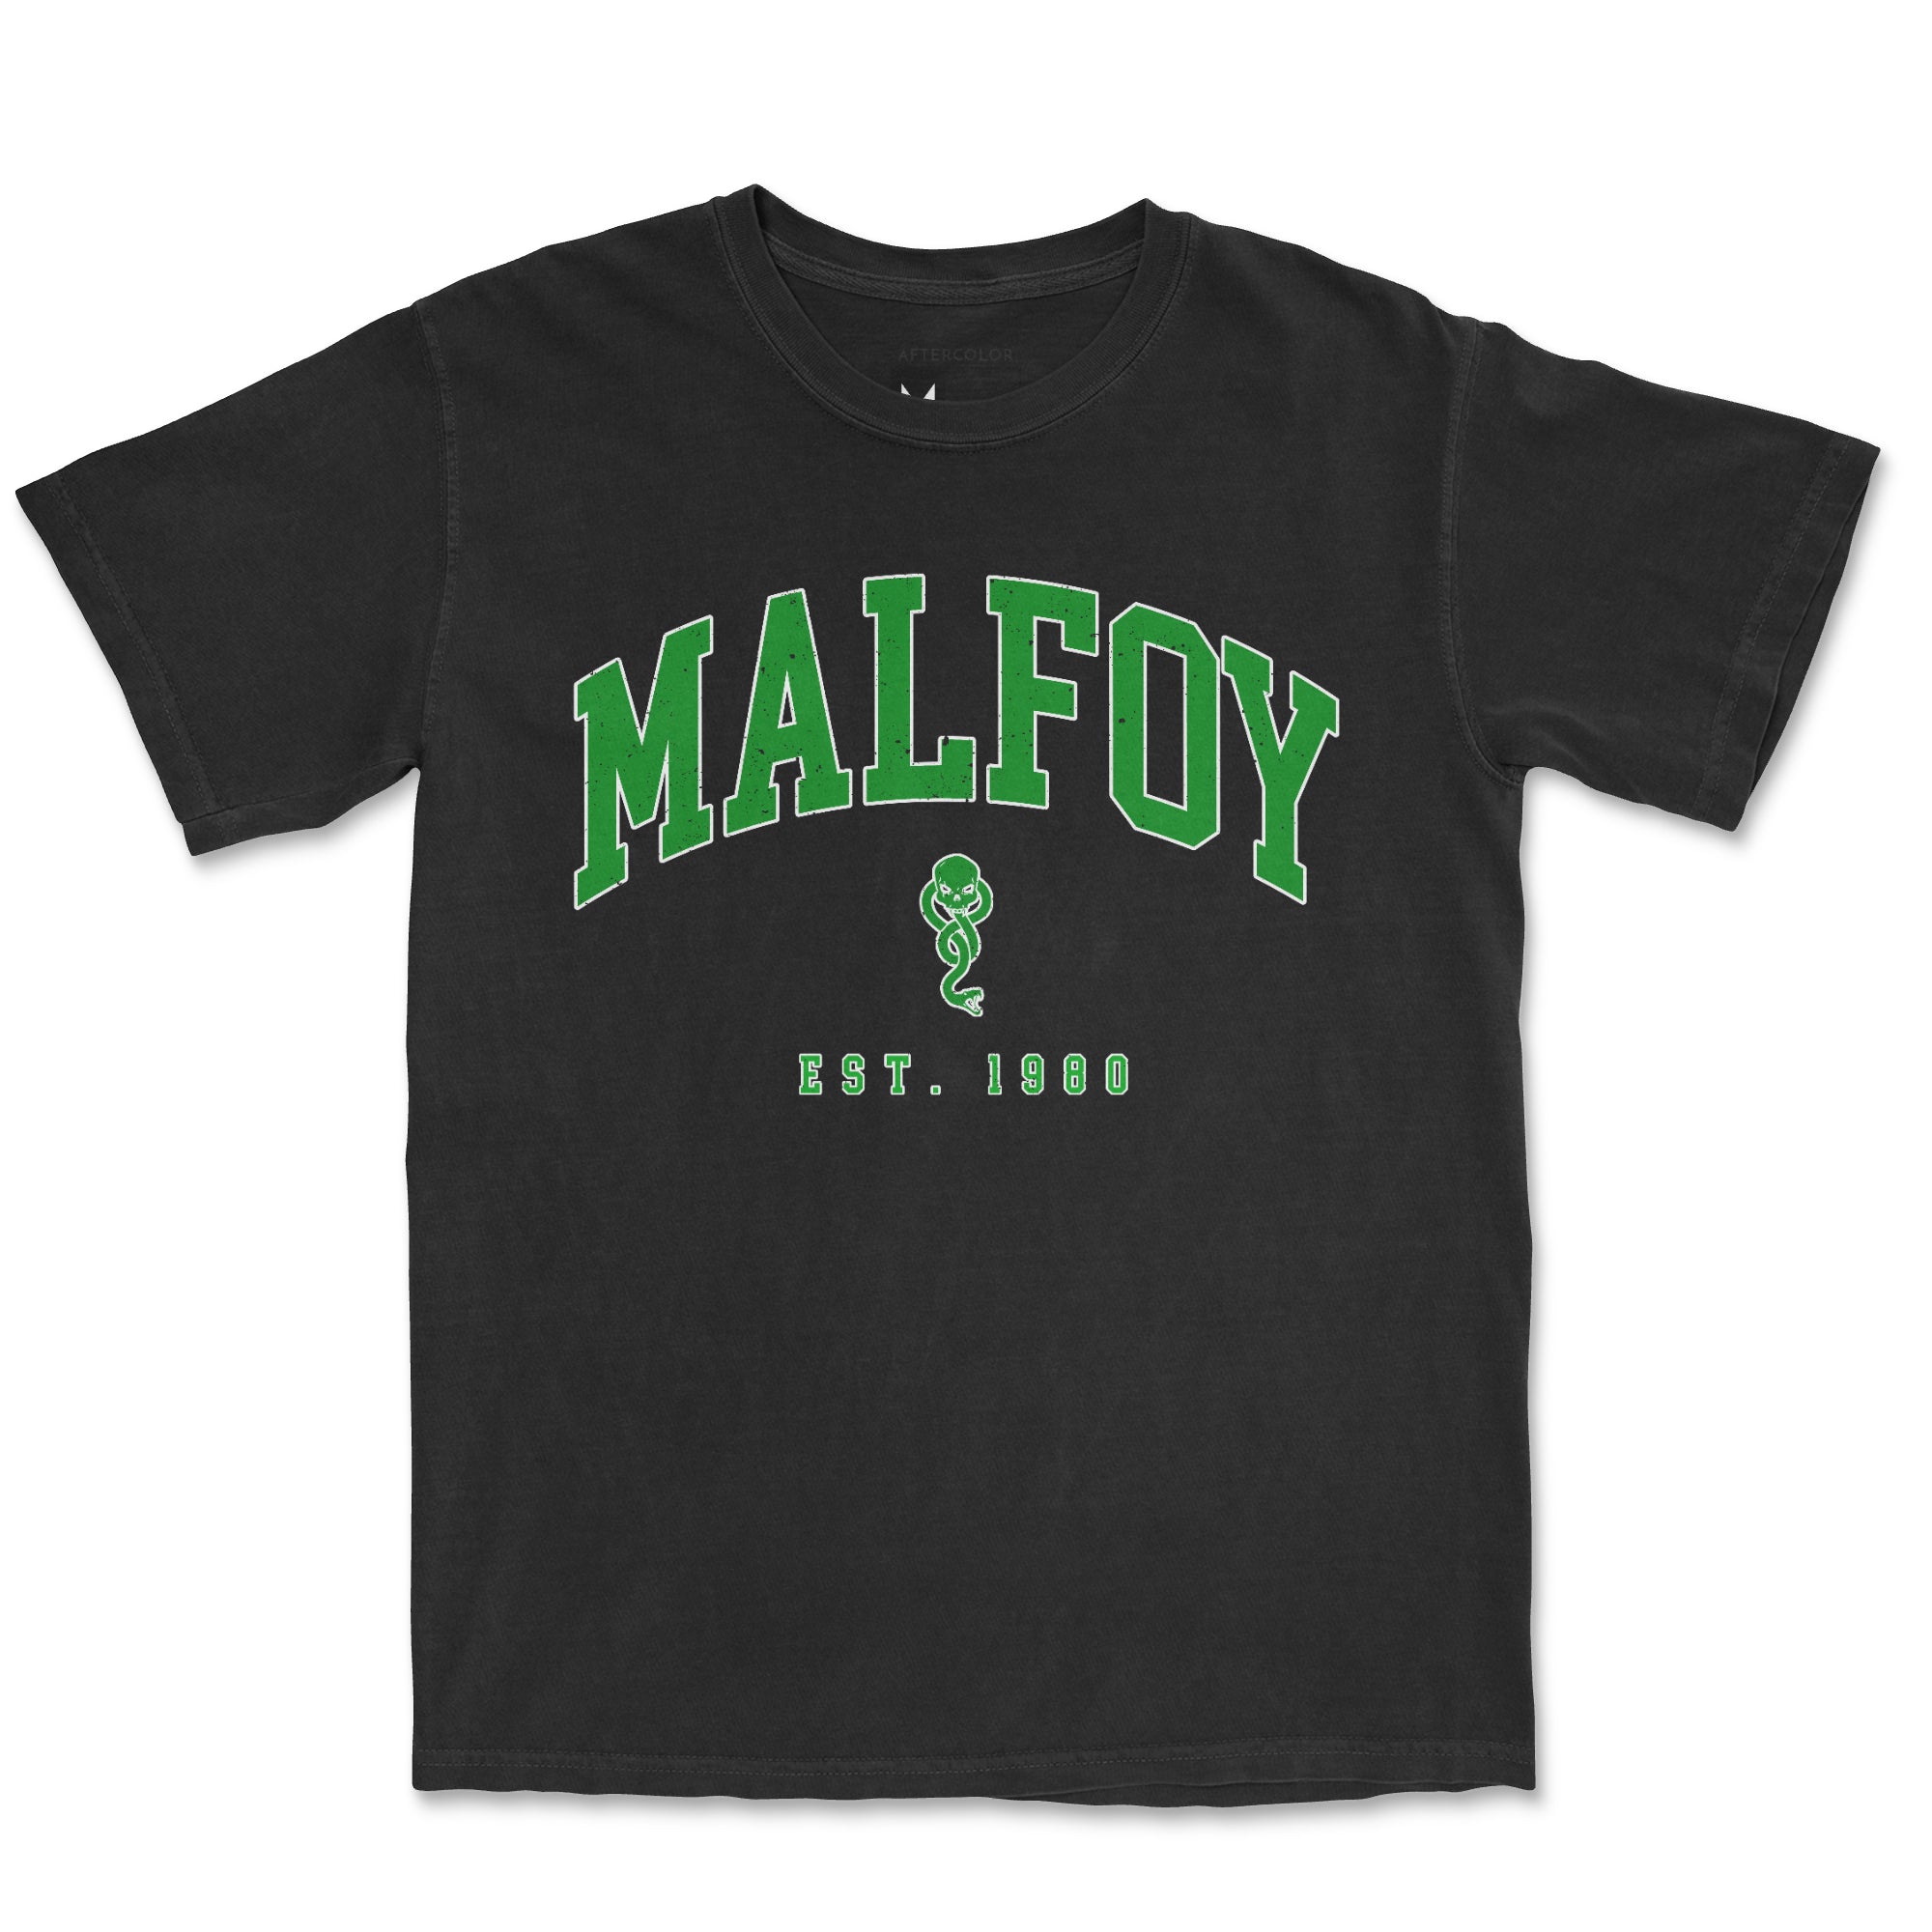 Malfoy 1980 - Garment Dyed Tee